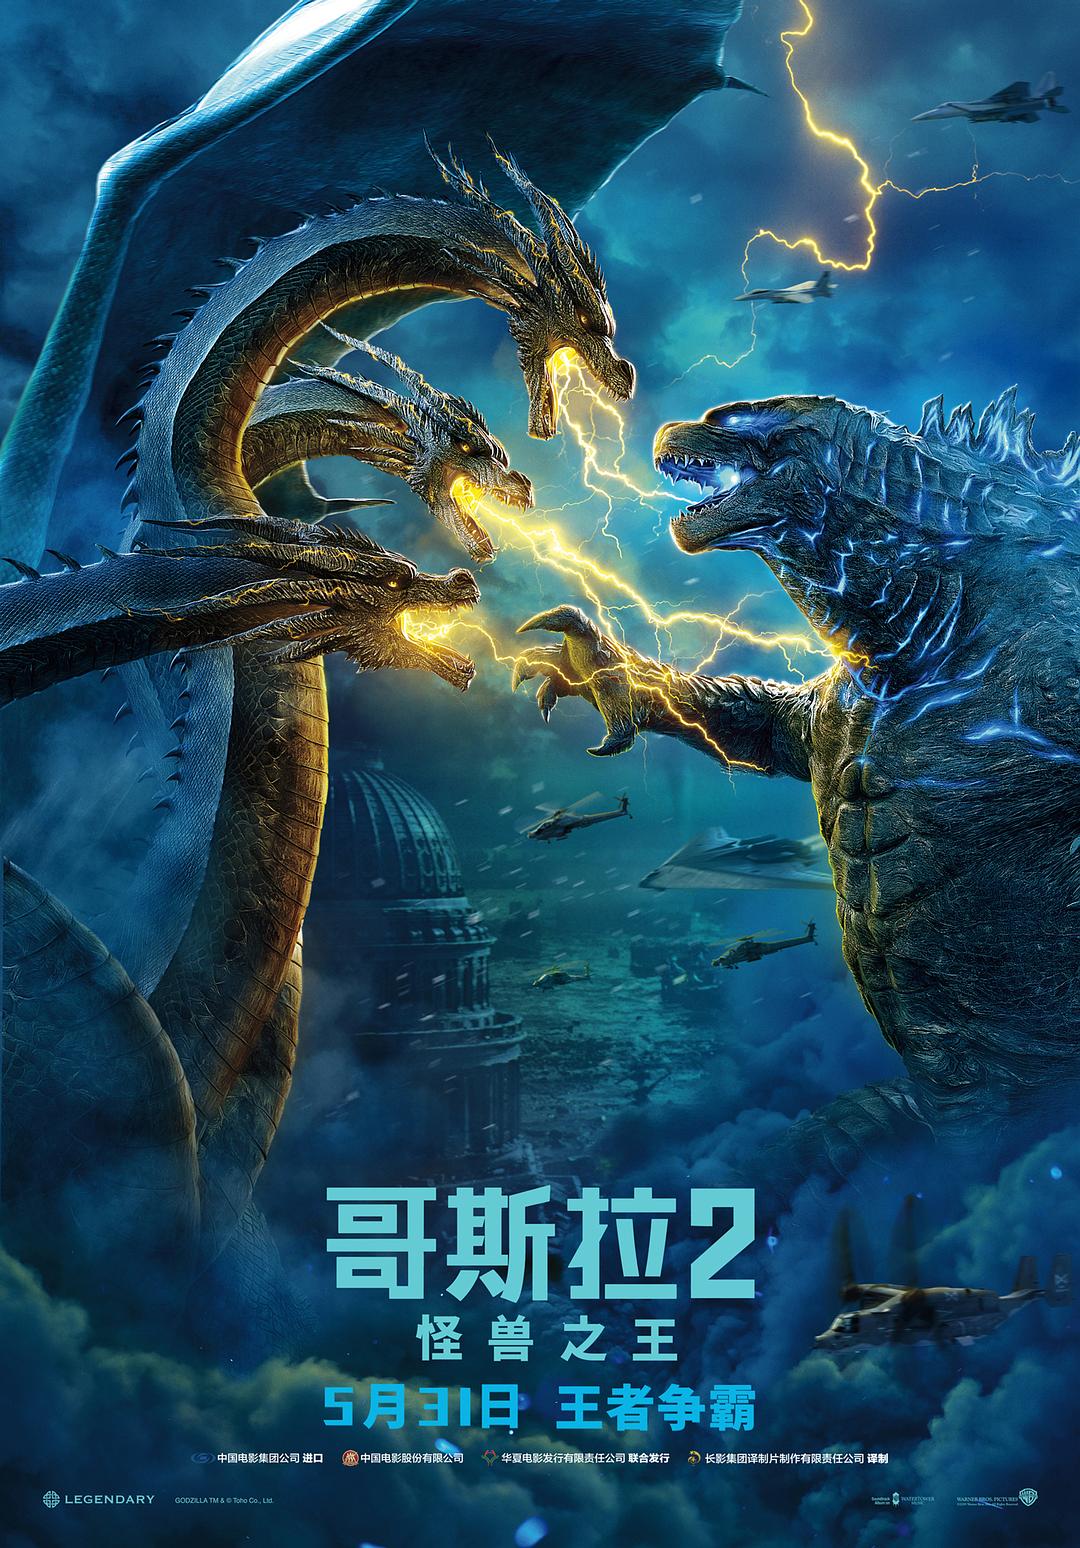 ˹2:֮ Godzilla.King.of.the.Monsters.2019.3D.1080p.BluRay.x264-GUACAMOLE 9.84-1.png